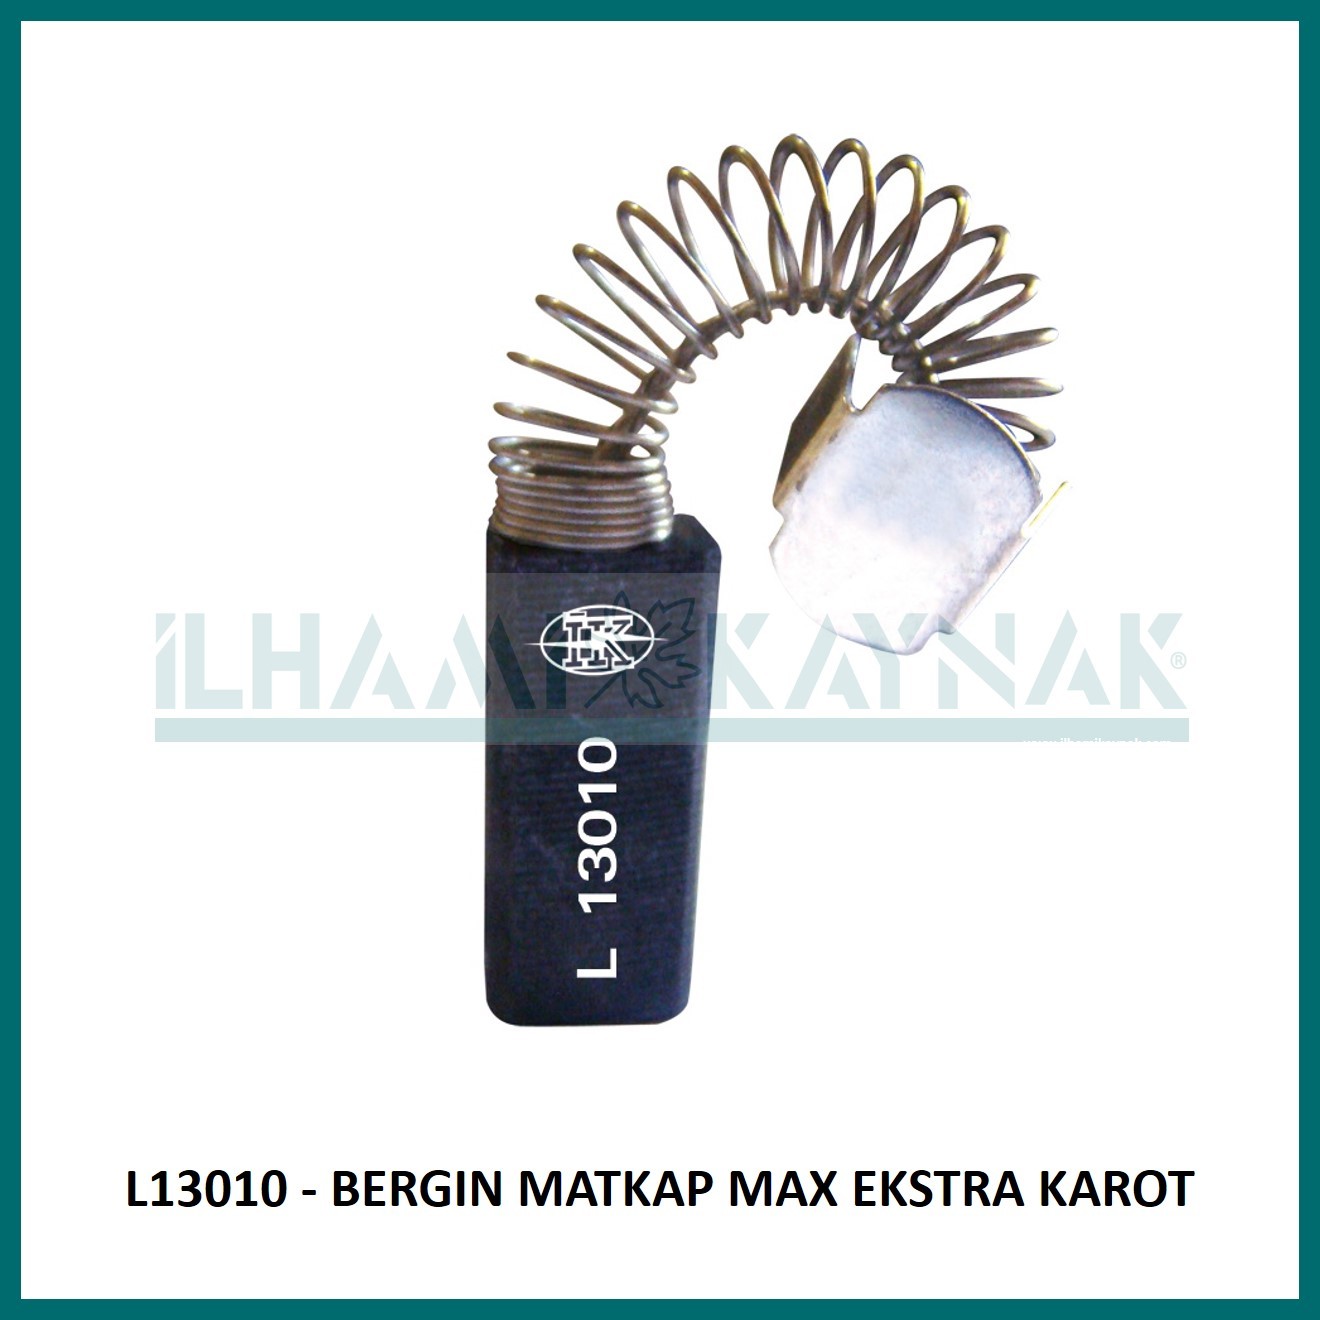 L13010 - BERGIN MATKAP MAX EKSTRA KAROT - 8*10*25 mm - Minimum Satın Alım: 10 Adet